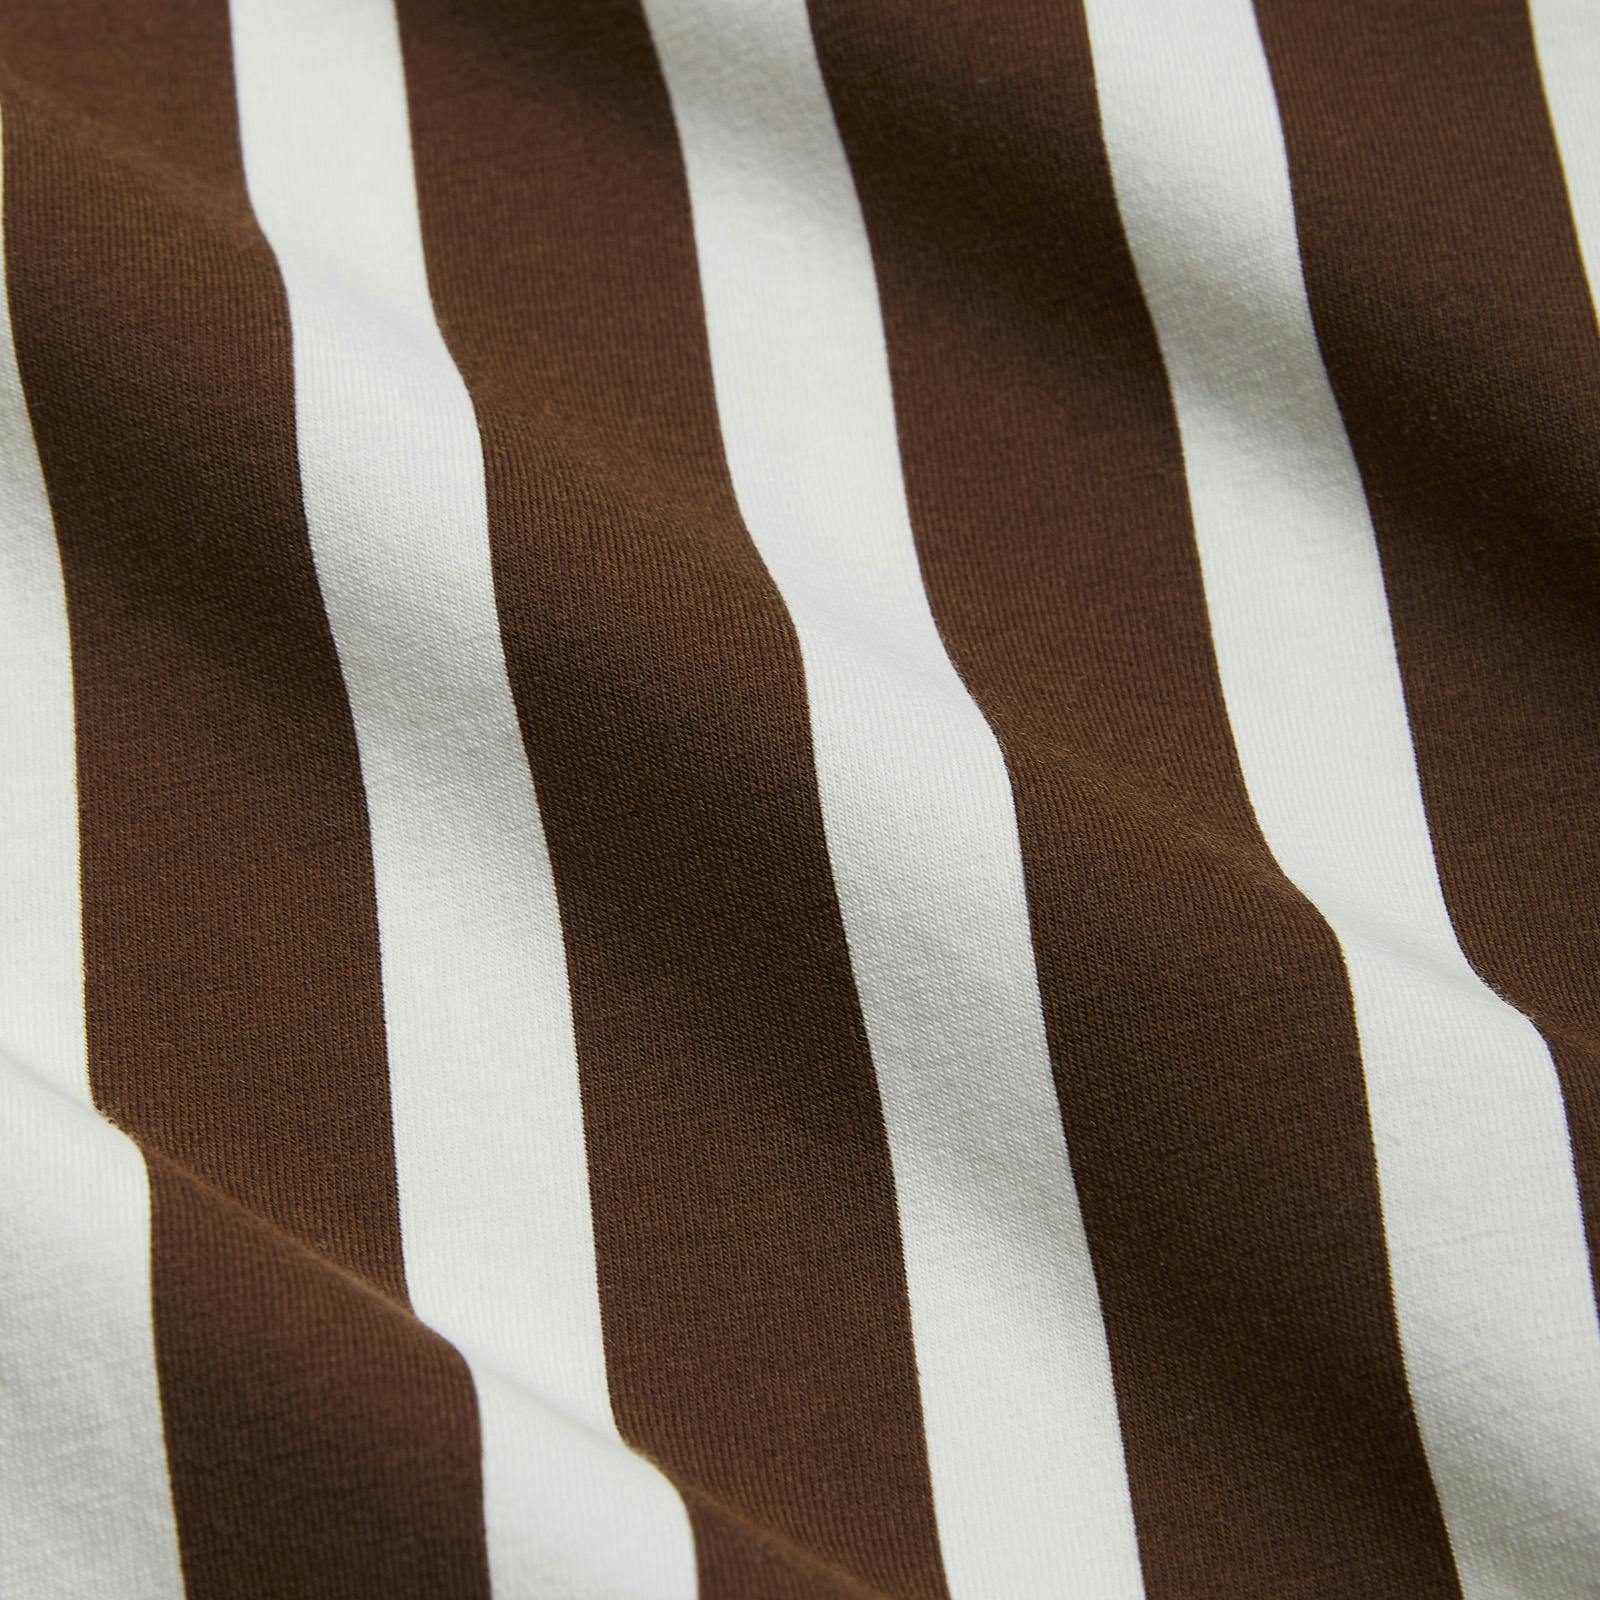 T-Shirt - Ritzratz stripe - Brown